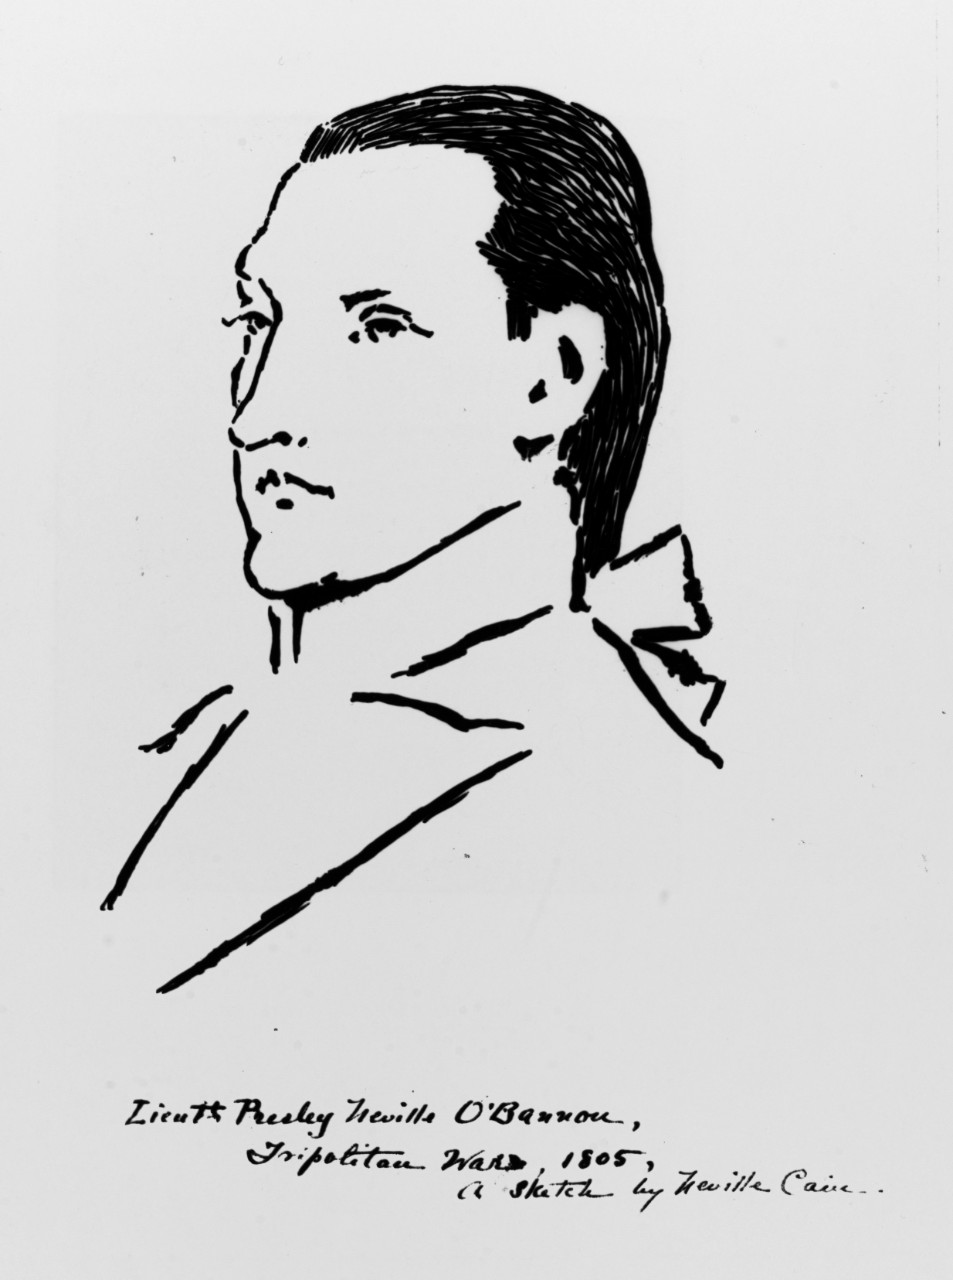 Lieutenant Presley Neville O' Bannon, USMC